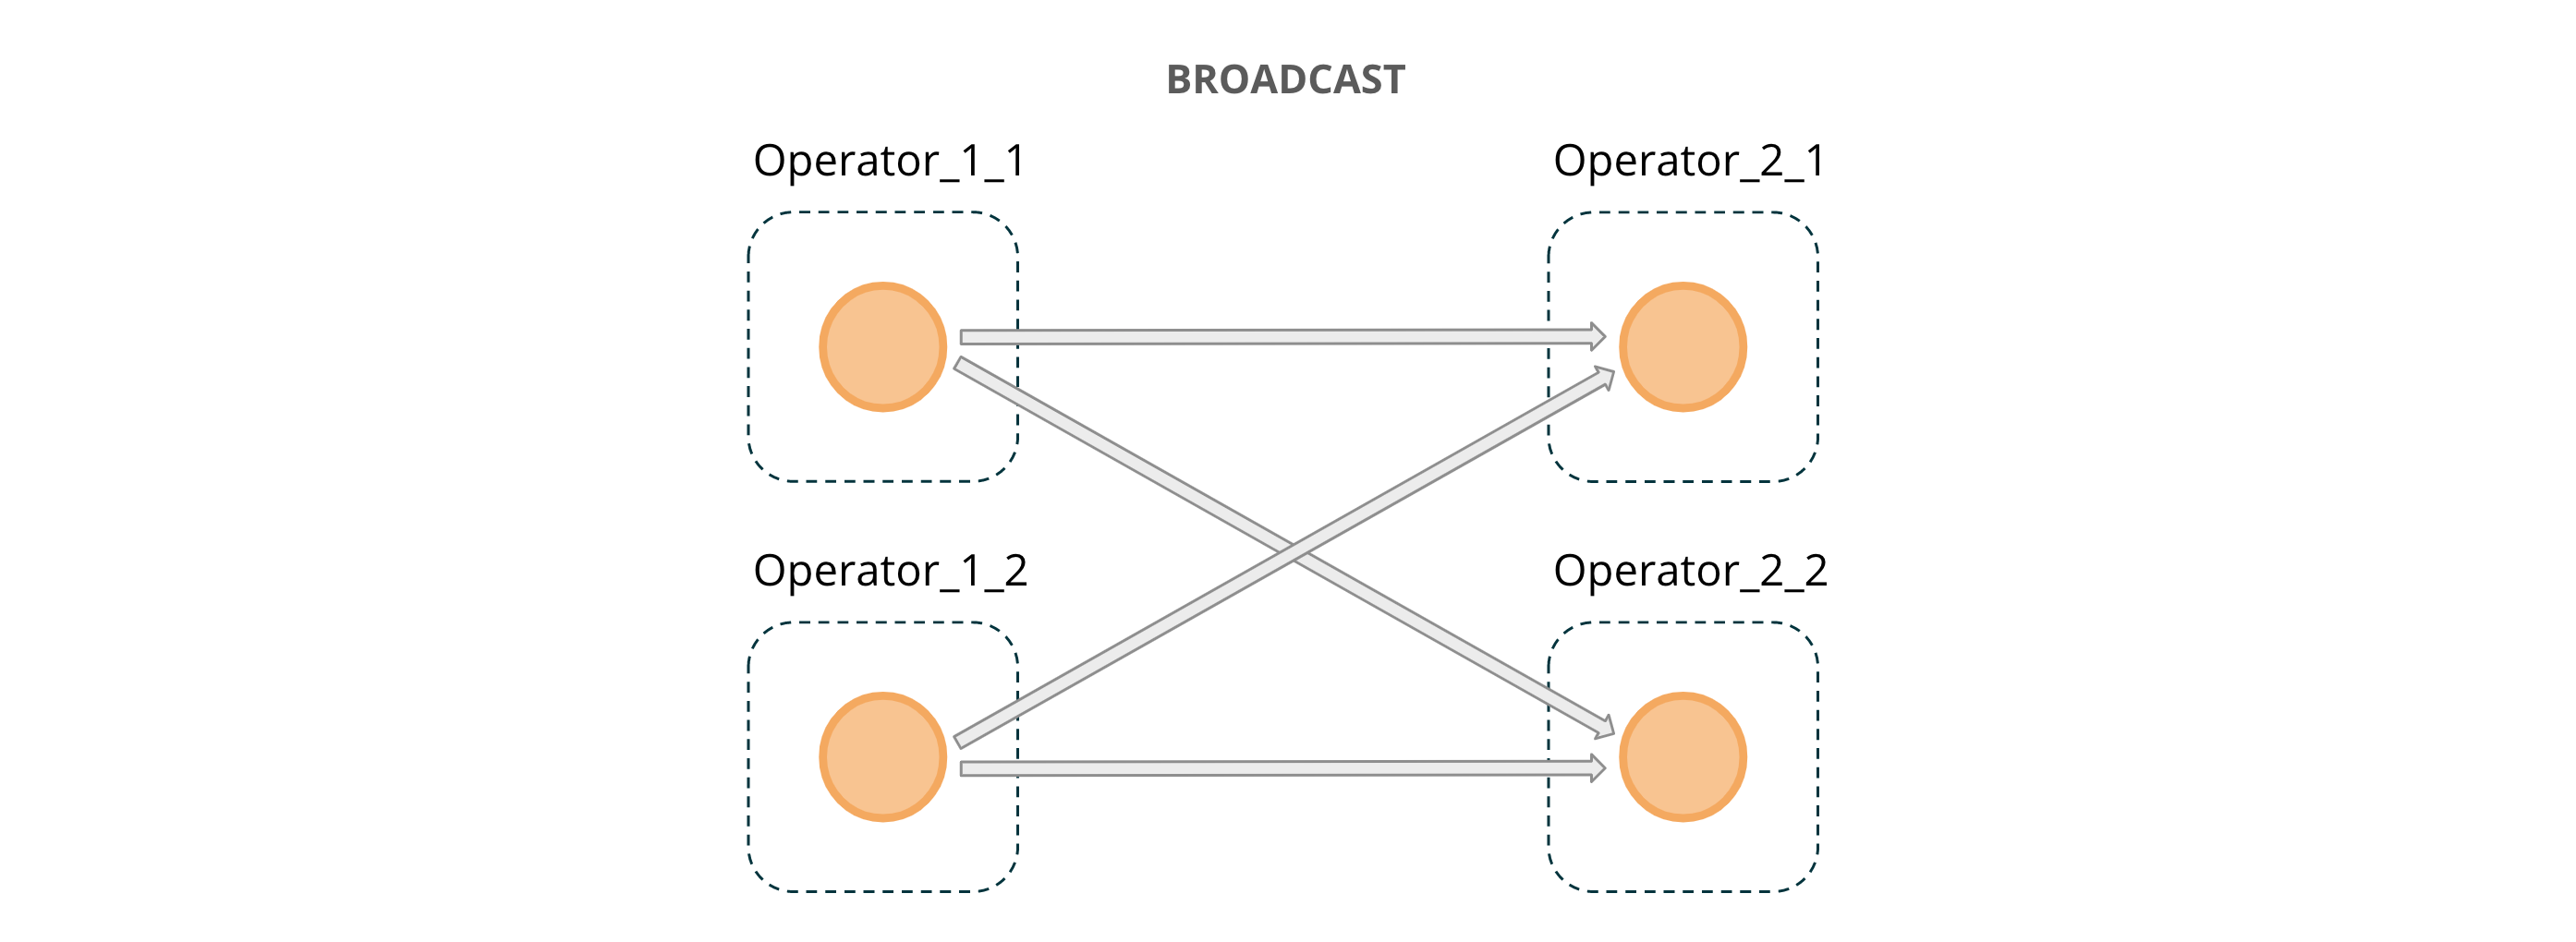 Figure 6: BROADCAST message passing across operator instances